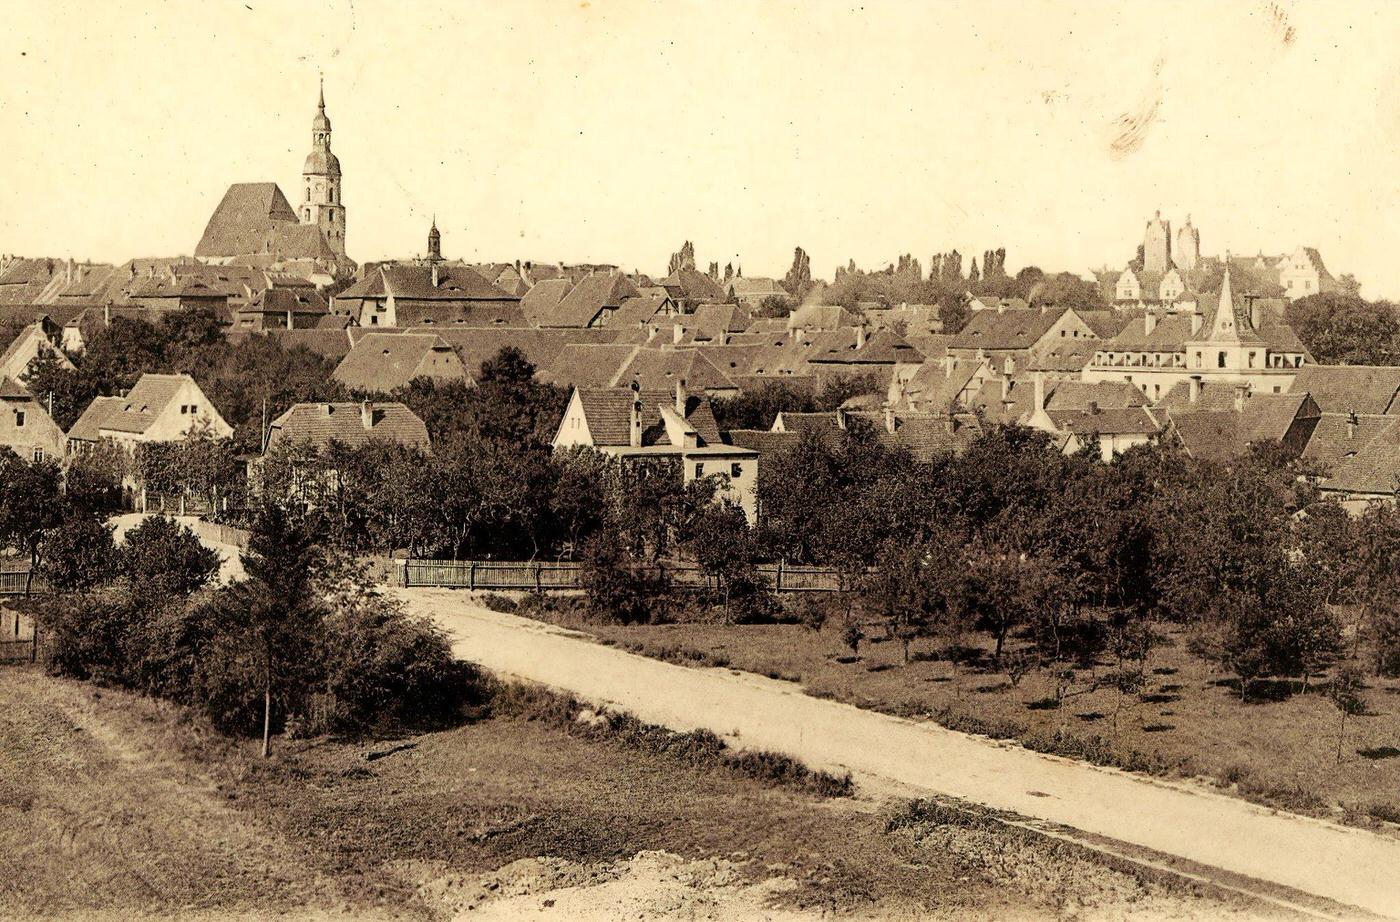 Churches in Landkreis Meissen, Schloss Strehla, Germany, 1903.